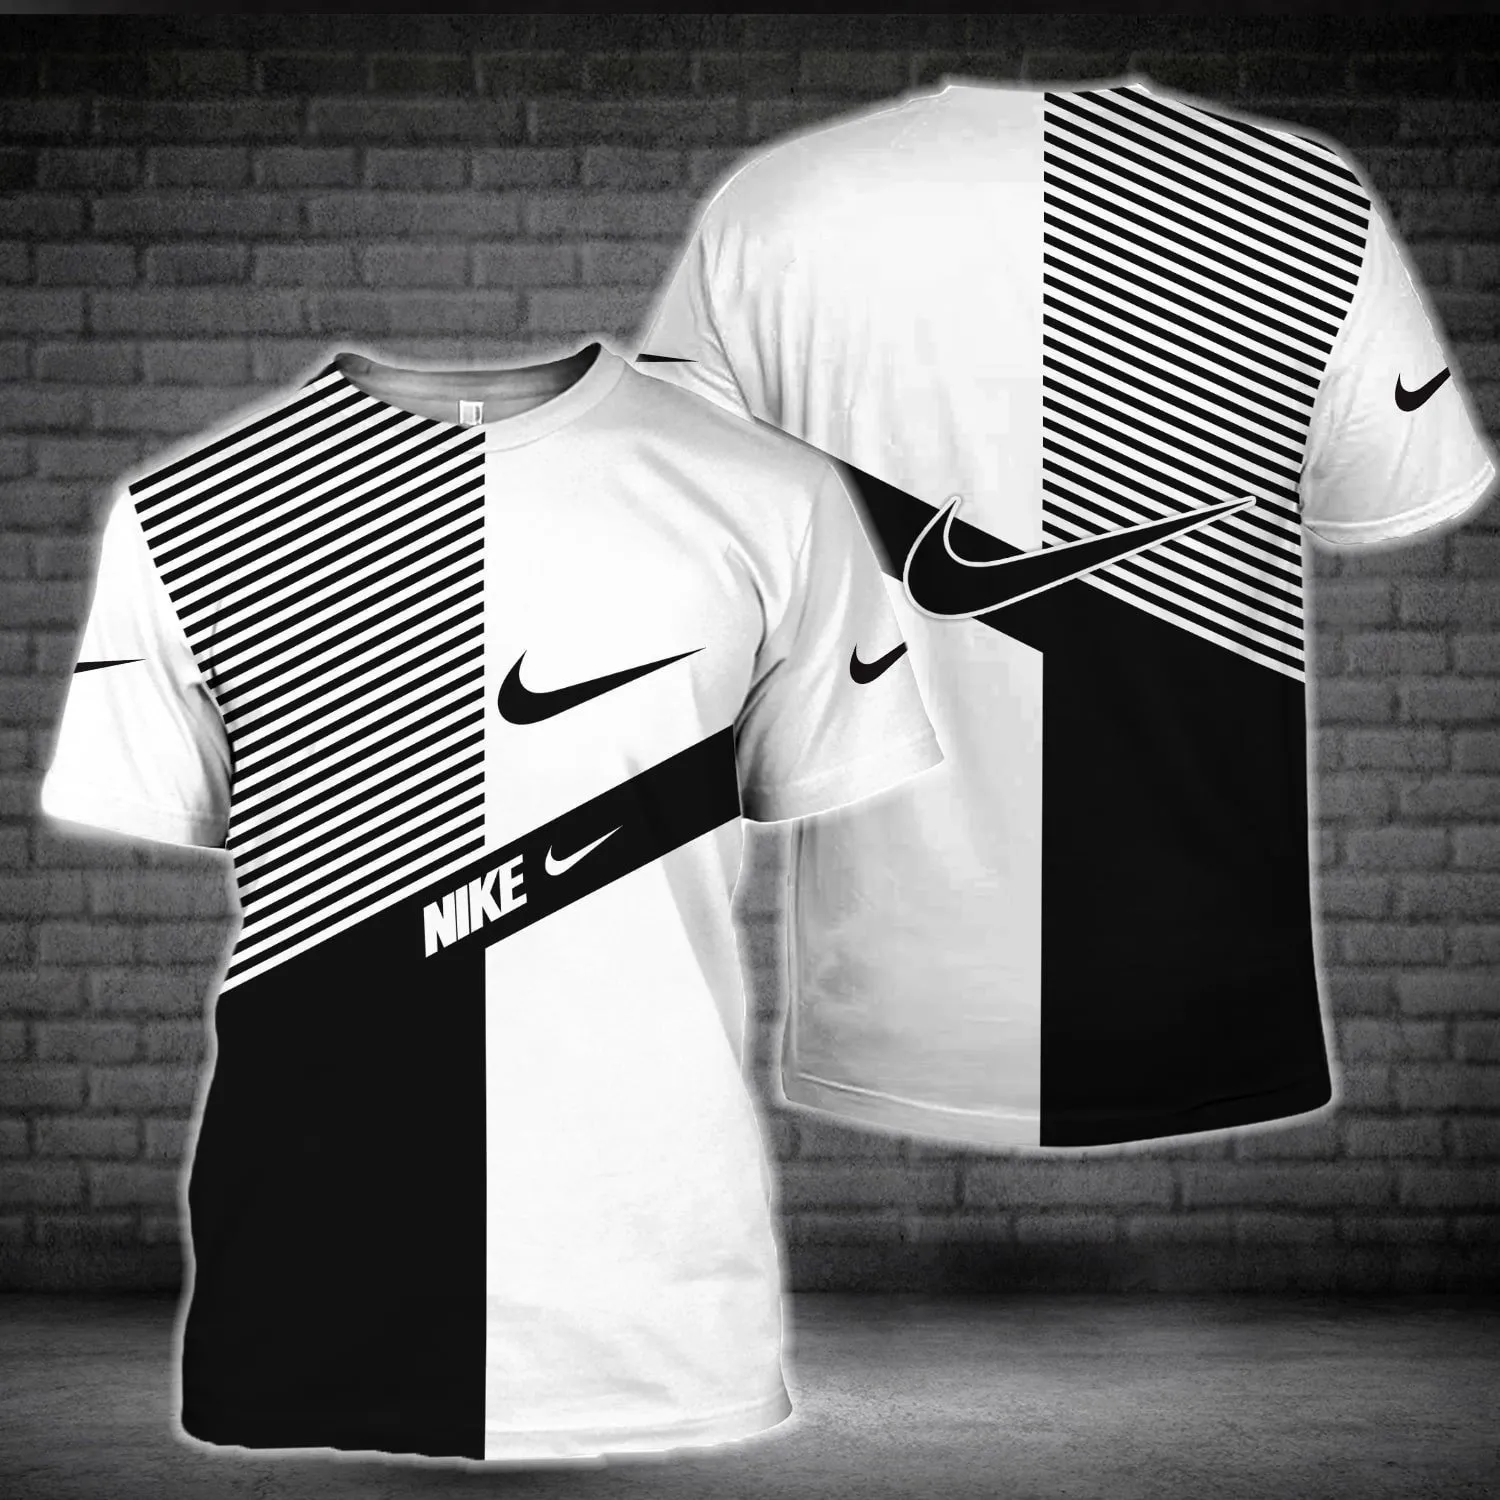 Nike Black White T Shirt Outfit Luxury Fashion